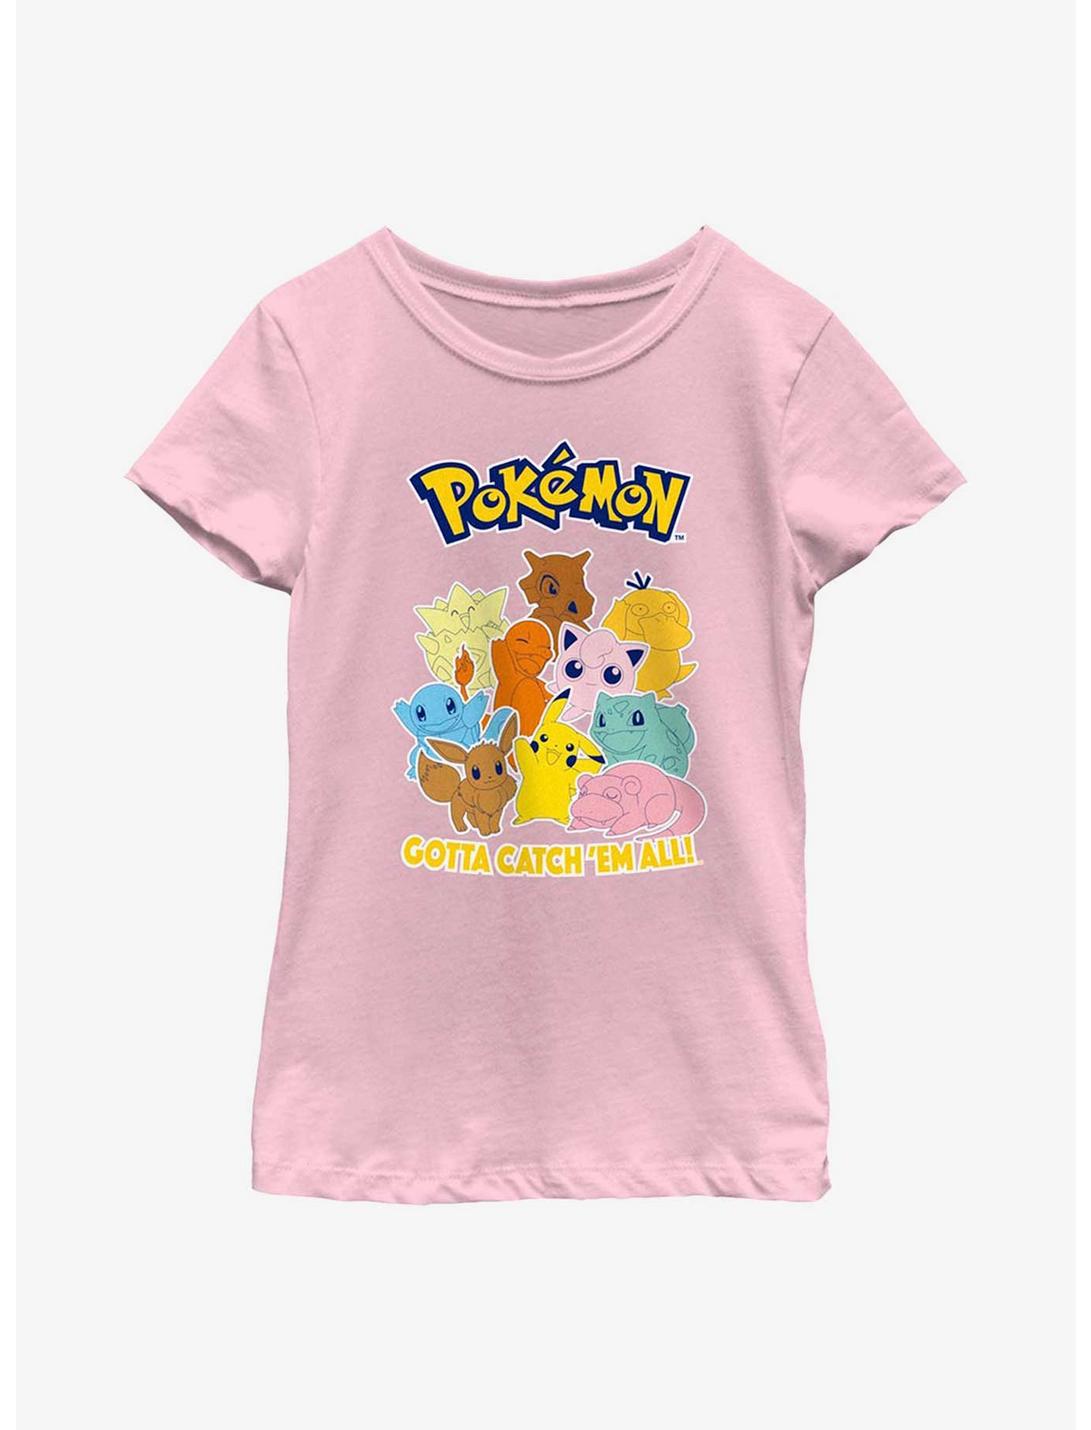 Pokémon Gotta Catch 'Em All! Youth Girls T-Shirt, PINK, hi-res